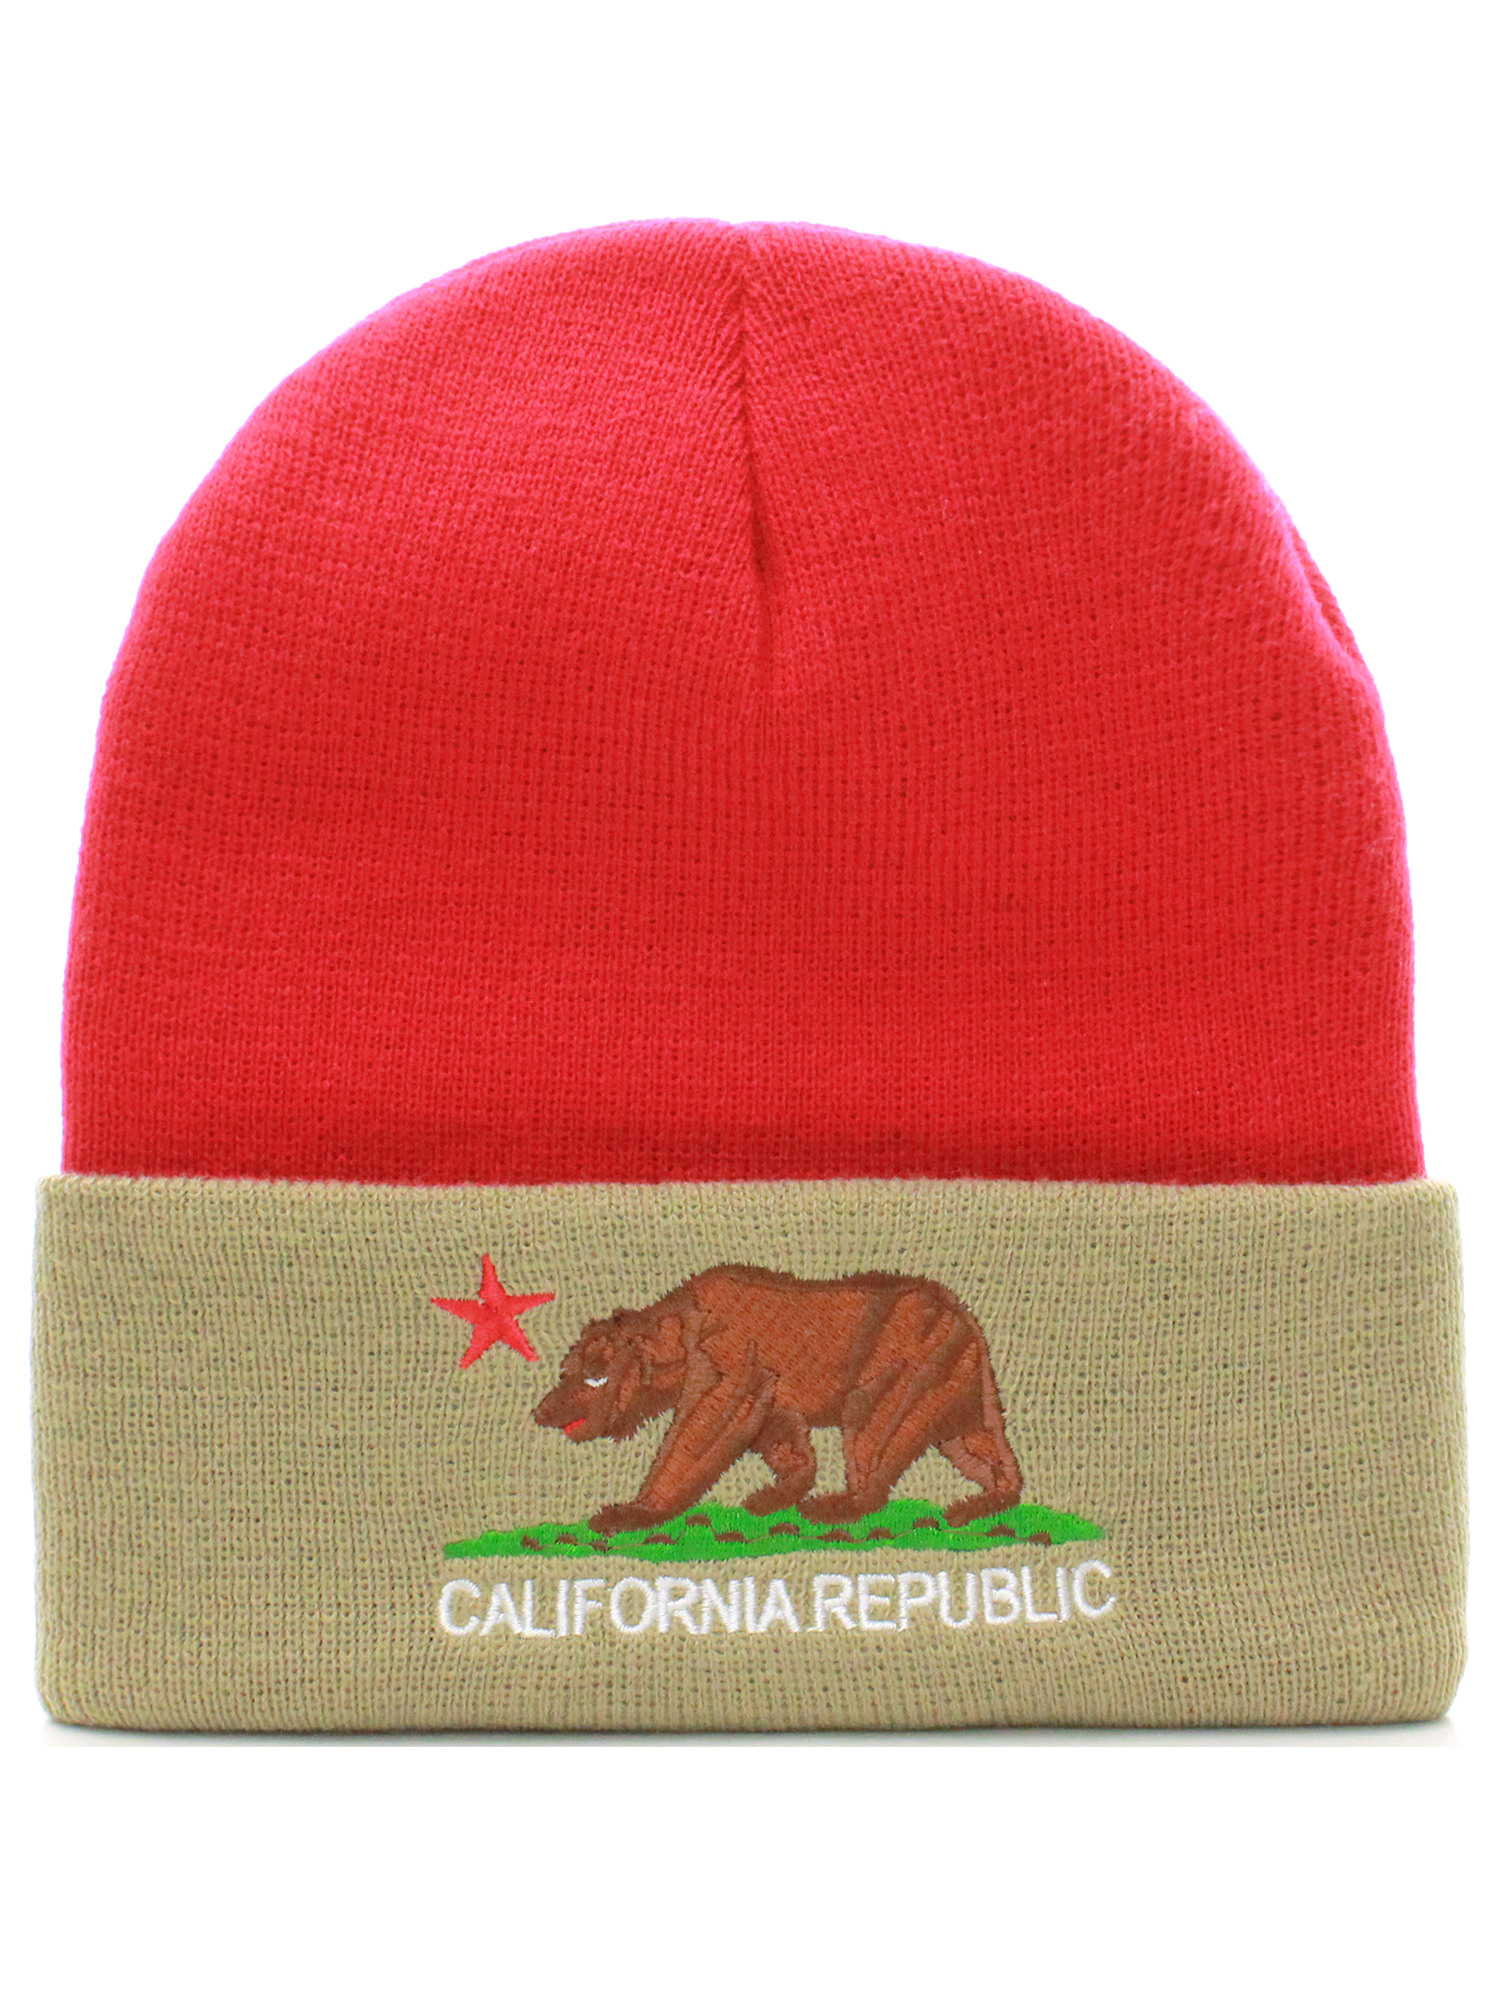 US Cities Unisex California Republic Winter Knit Beanie Hat Cap - Cuff - Red Khaki - image 1 of 1